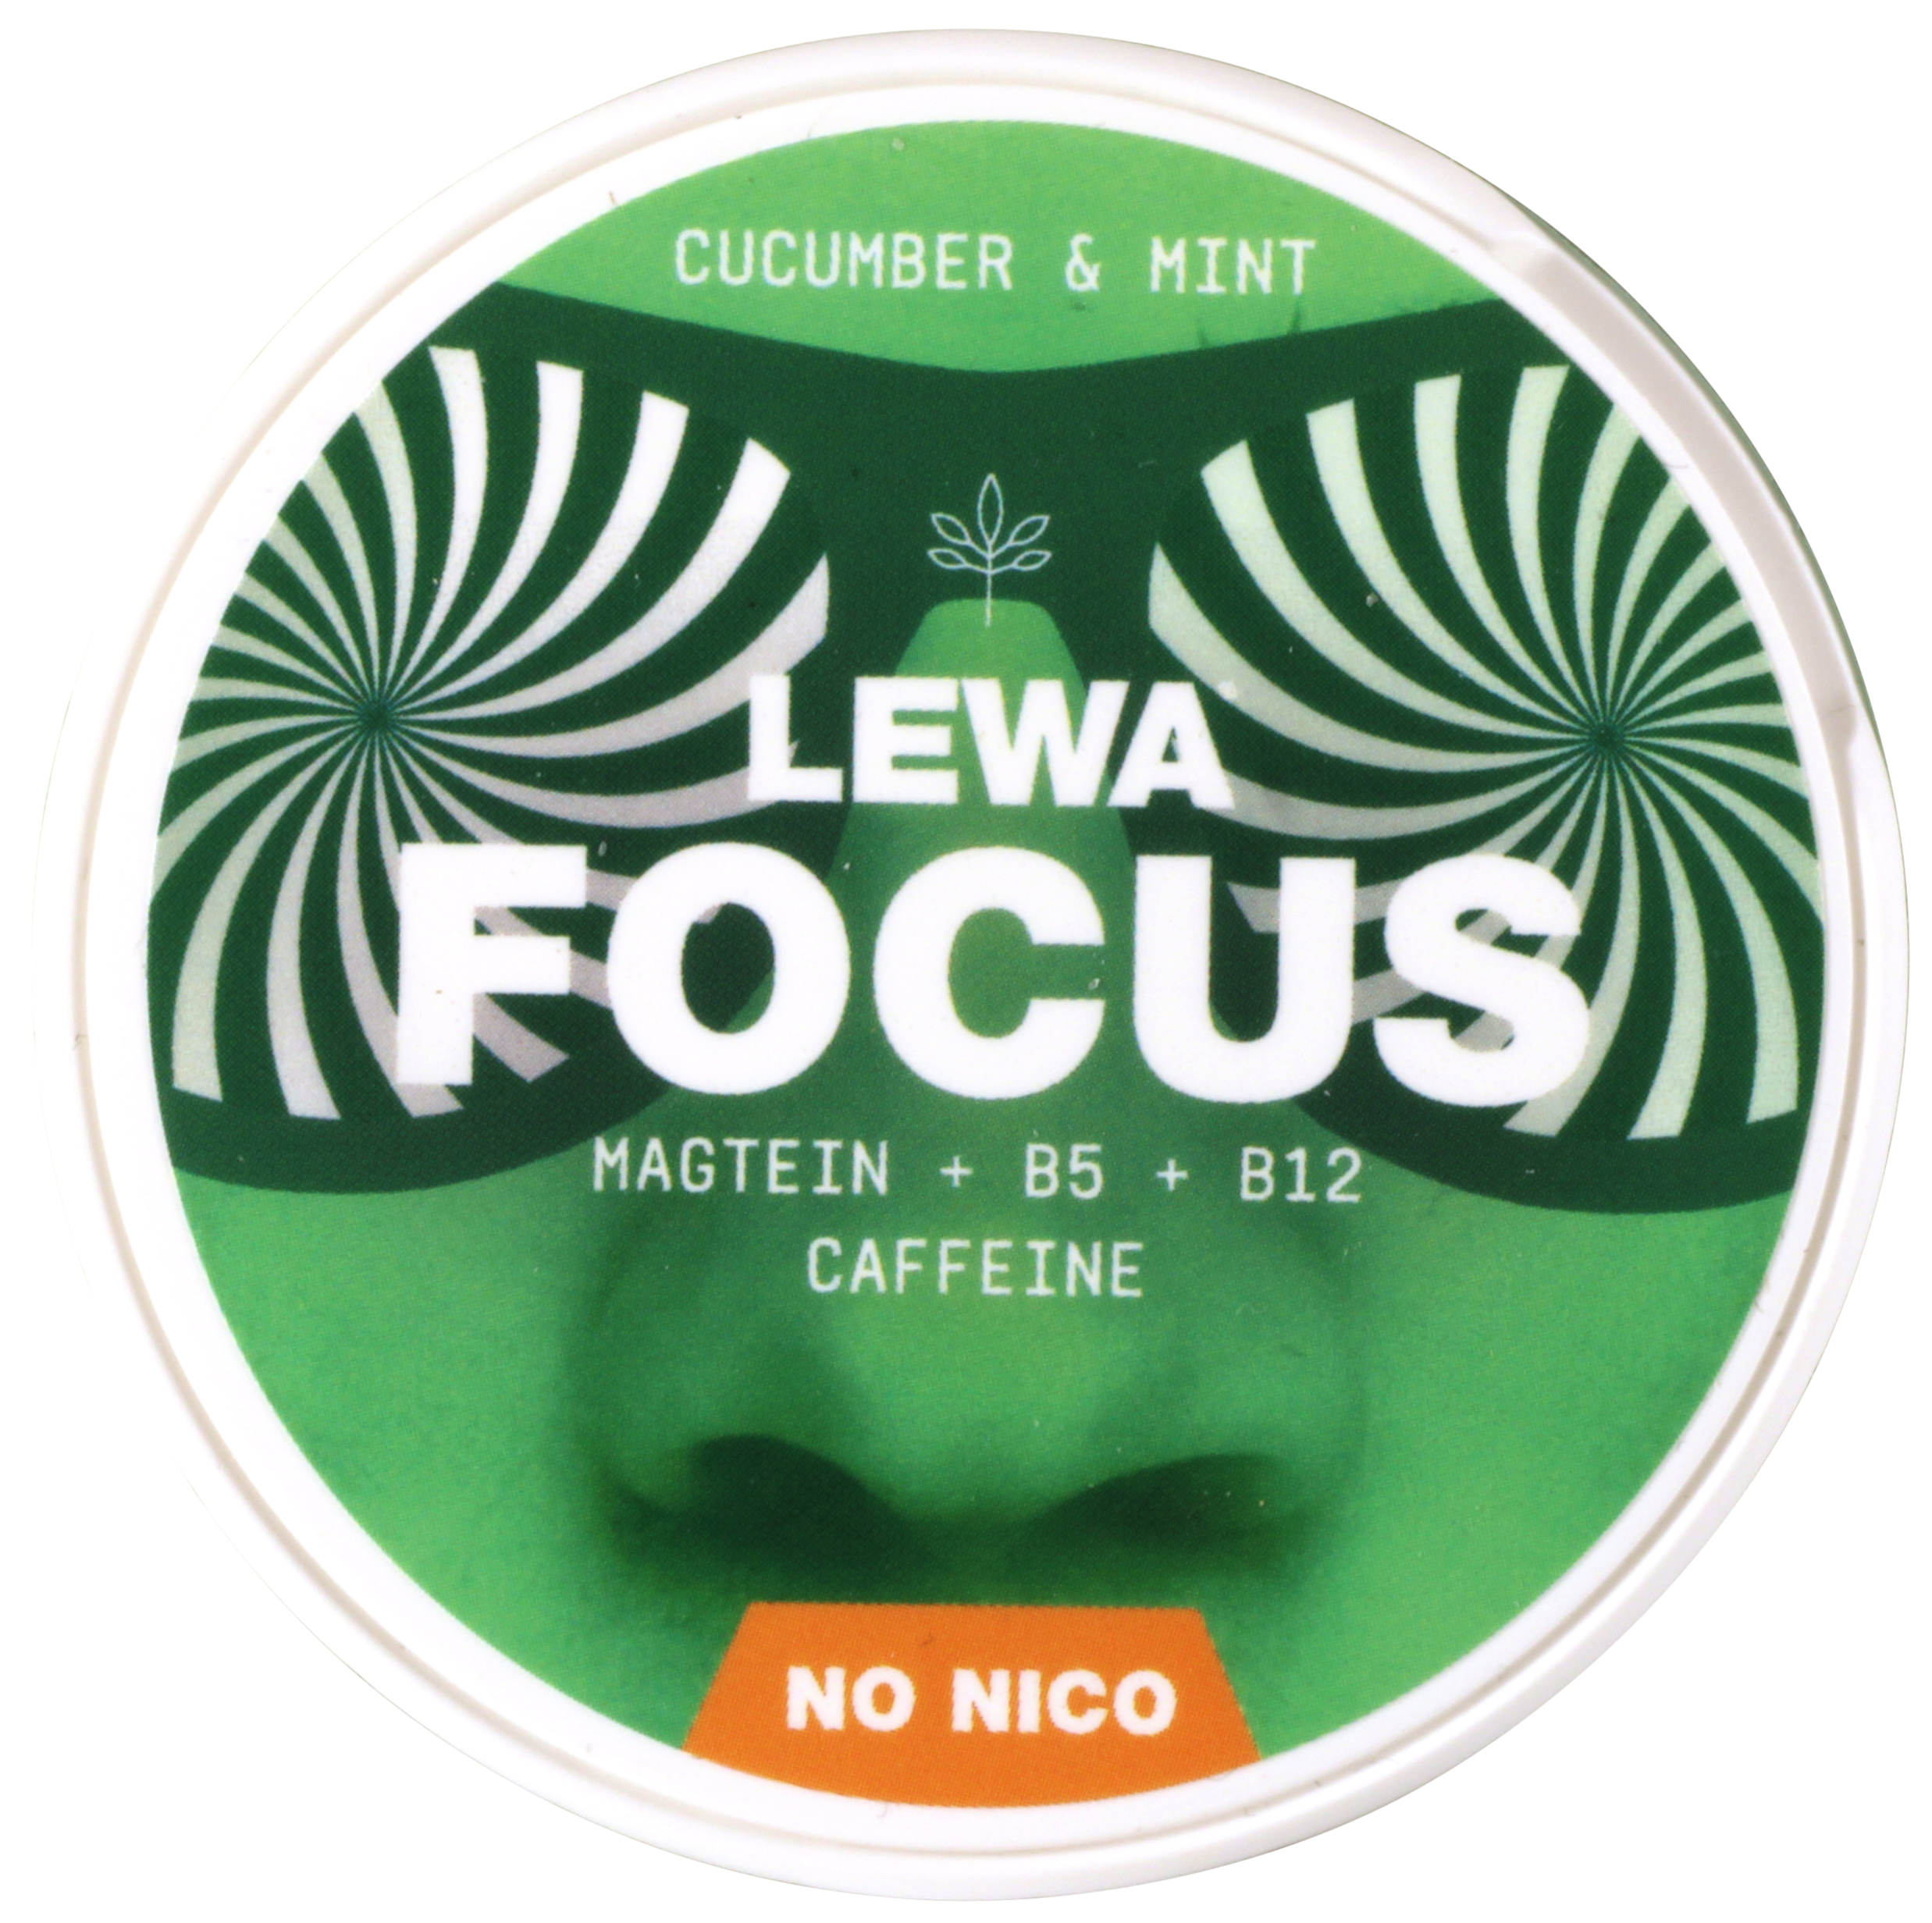 LEWA Focus: Cucumber Mint